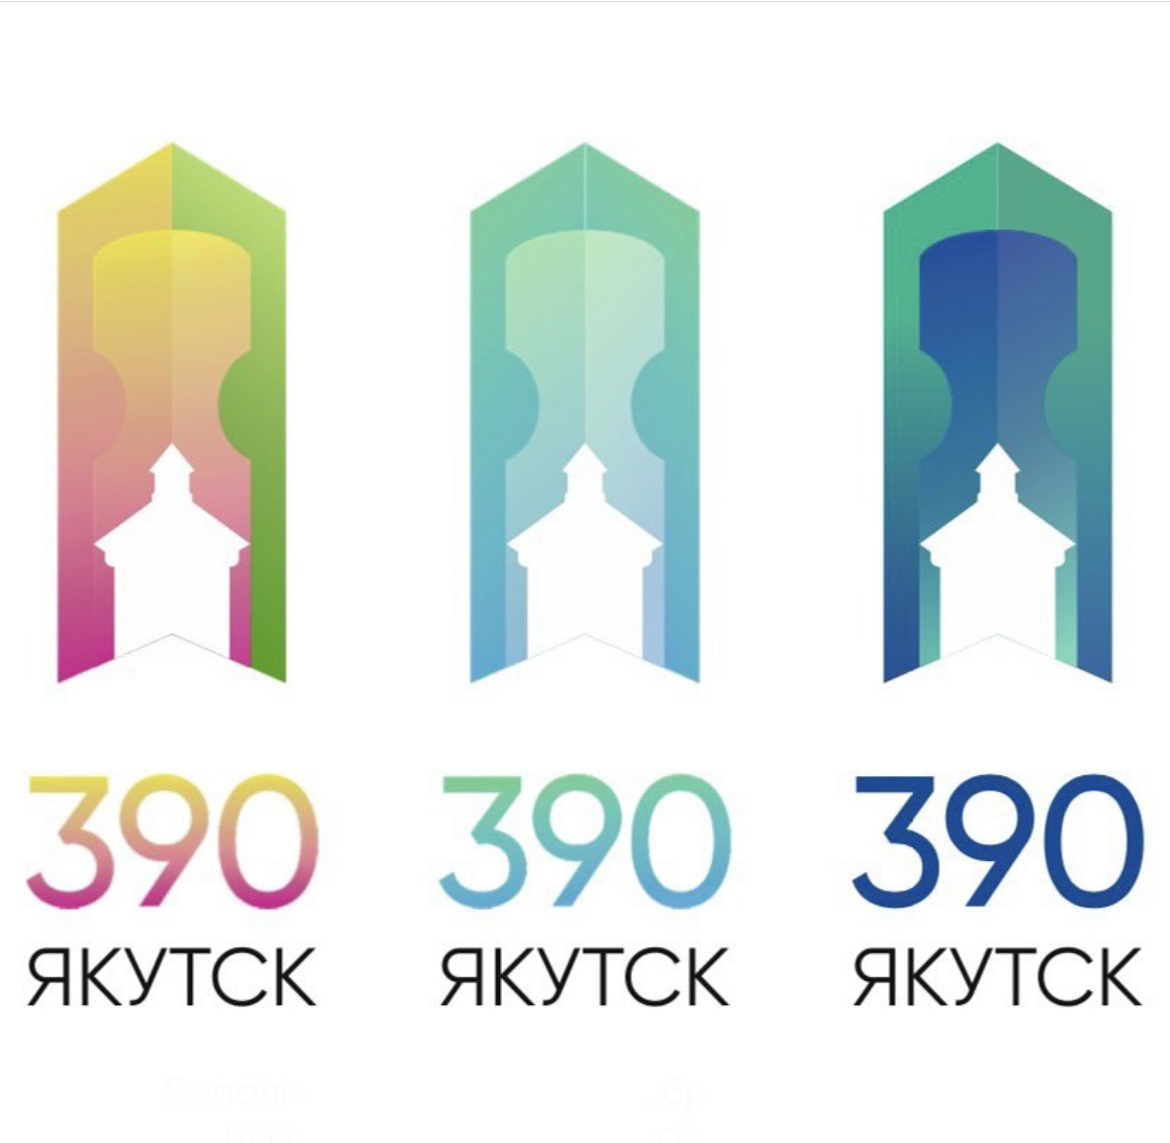 Представлен юбилейный логотип к 390-летию города Якутска